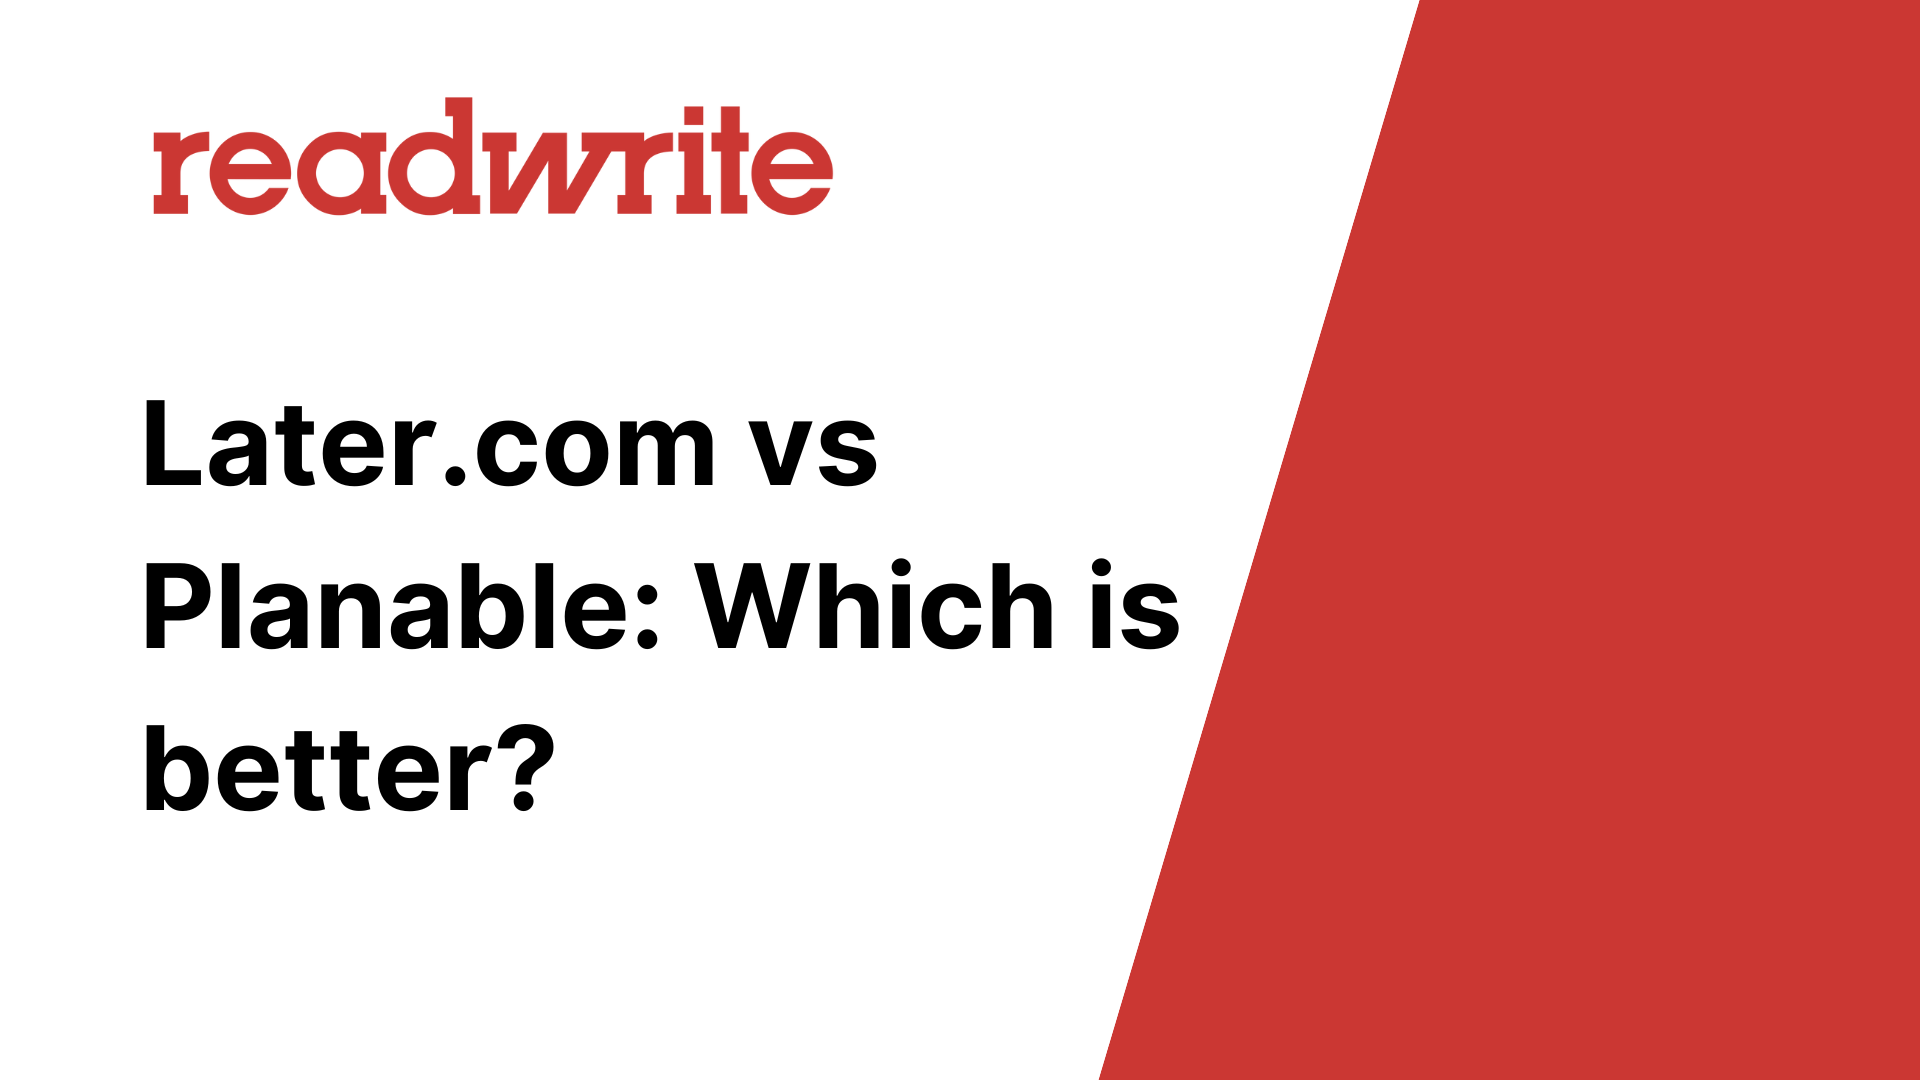 Later.com Versus Planable - readwrite.com